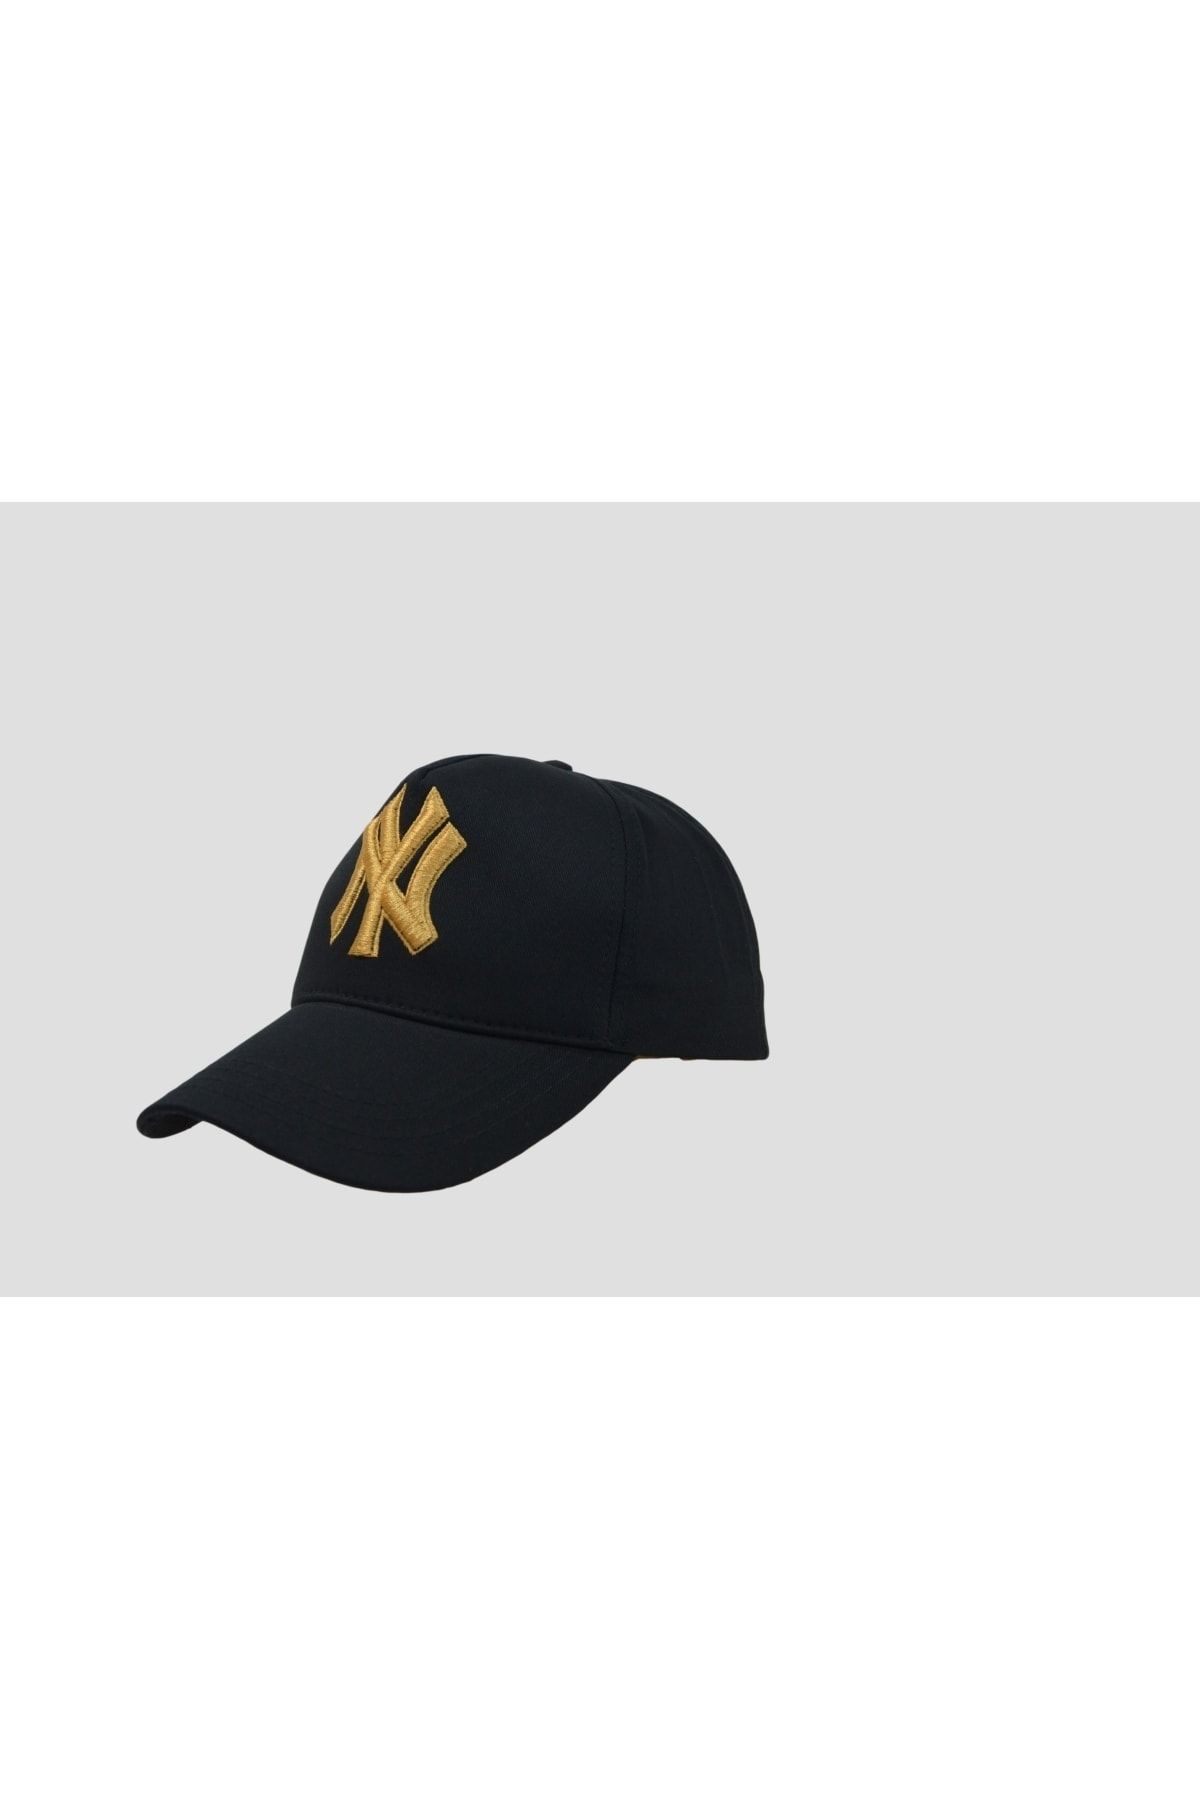 Nacar Unisex Siyah Ny New York Özel Gold Nakış Şapka